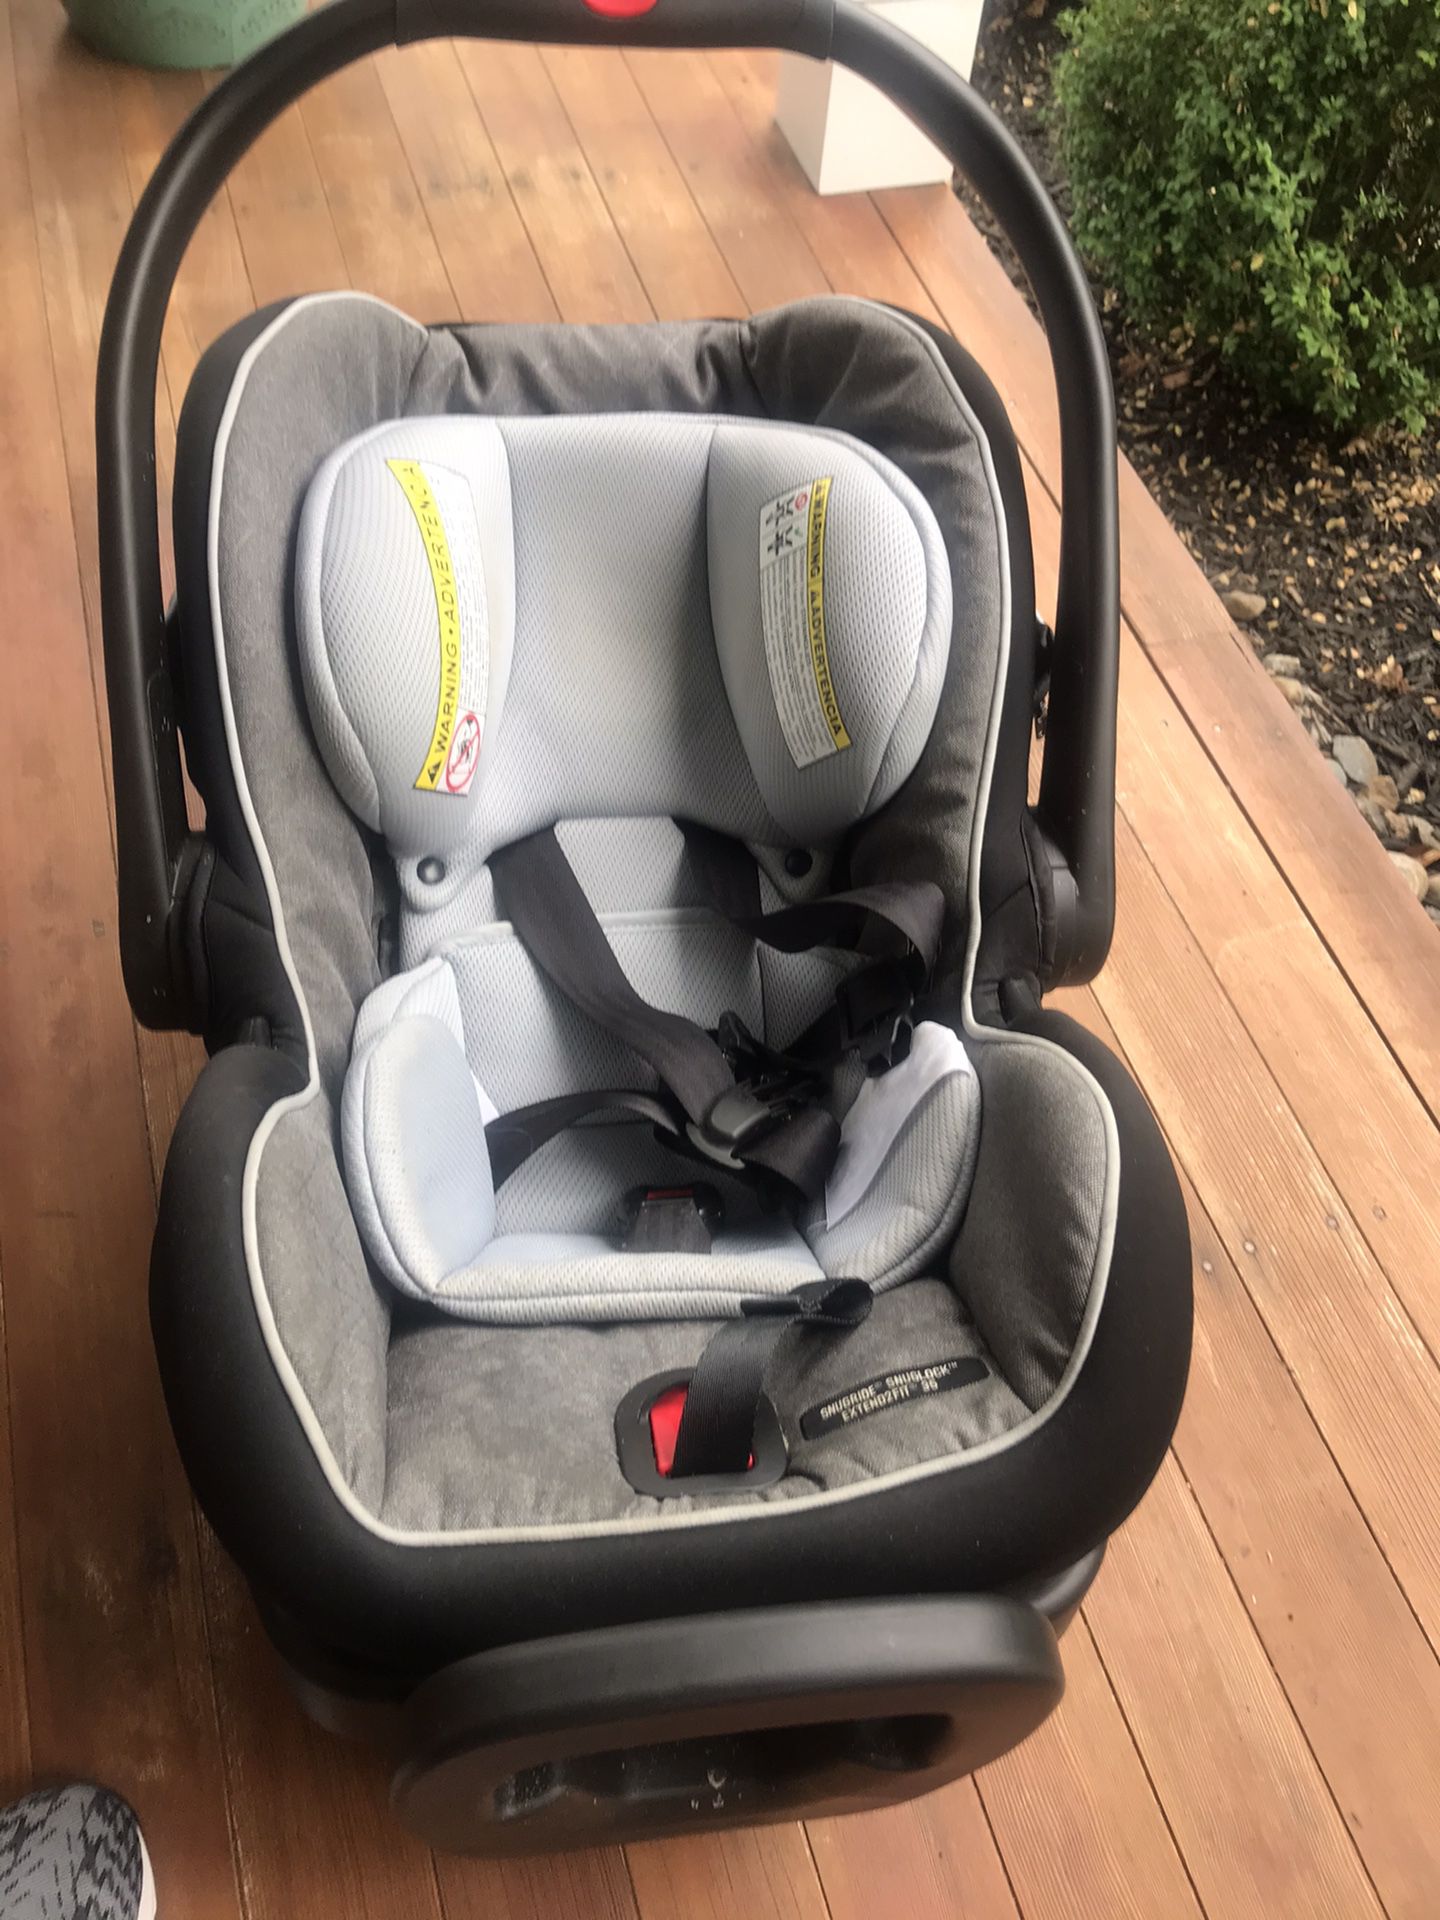 Snugride 35 graco baby car seat